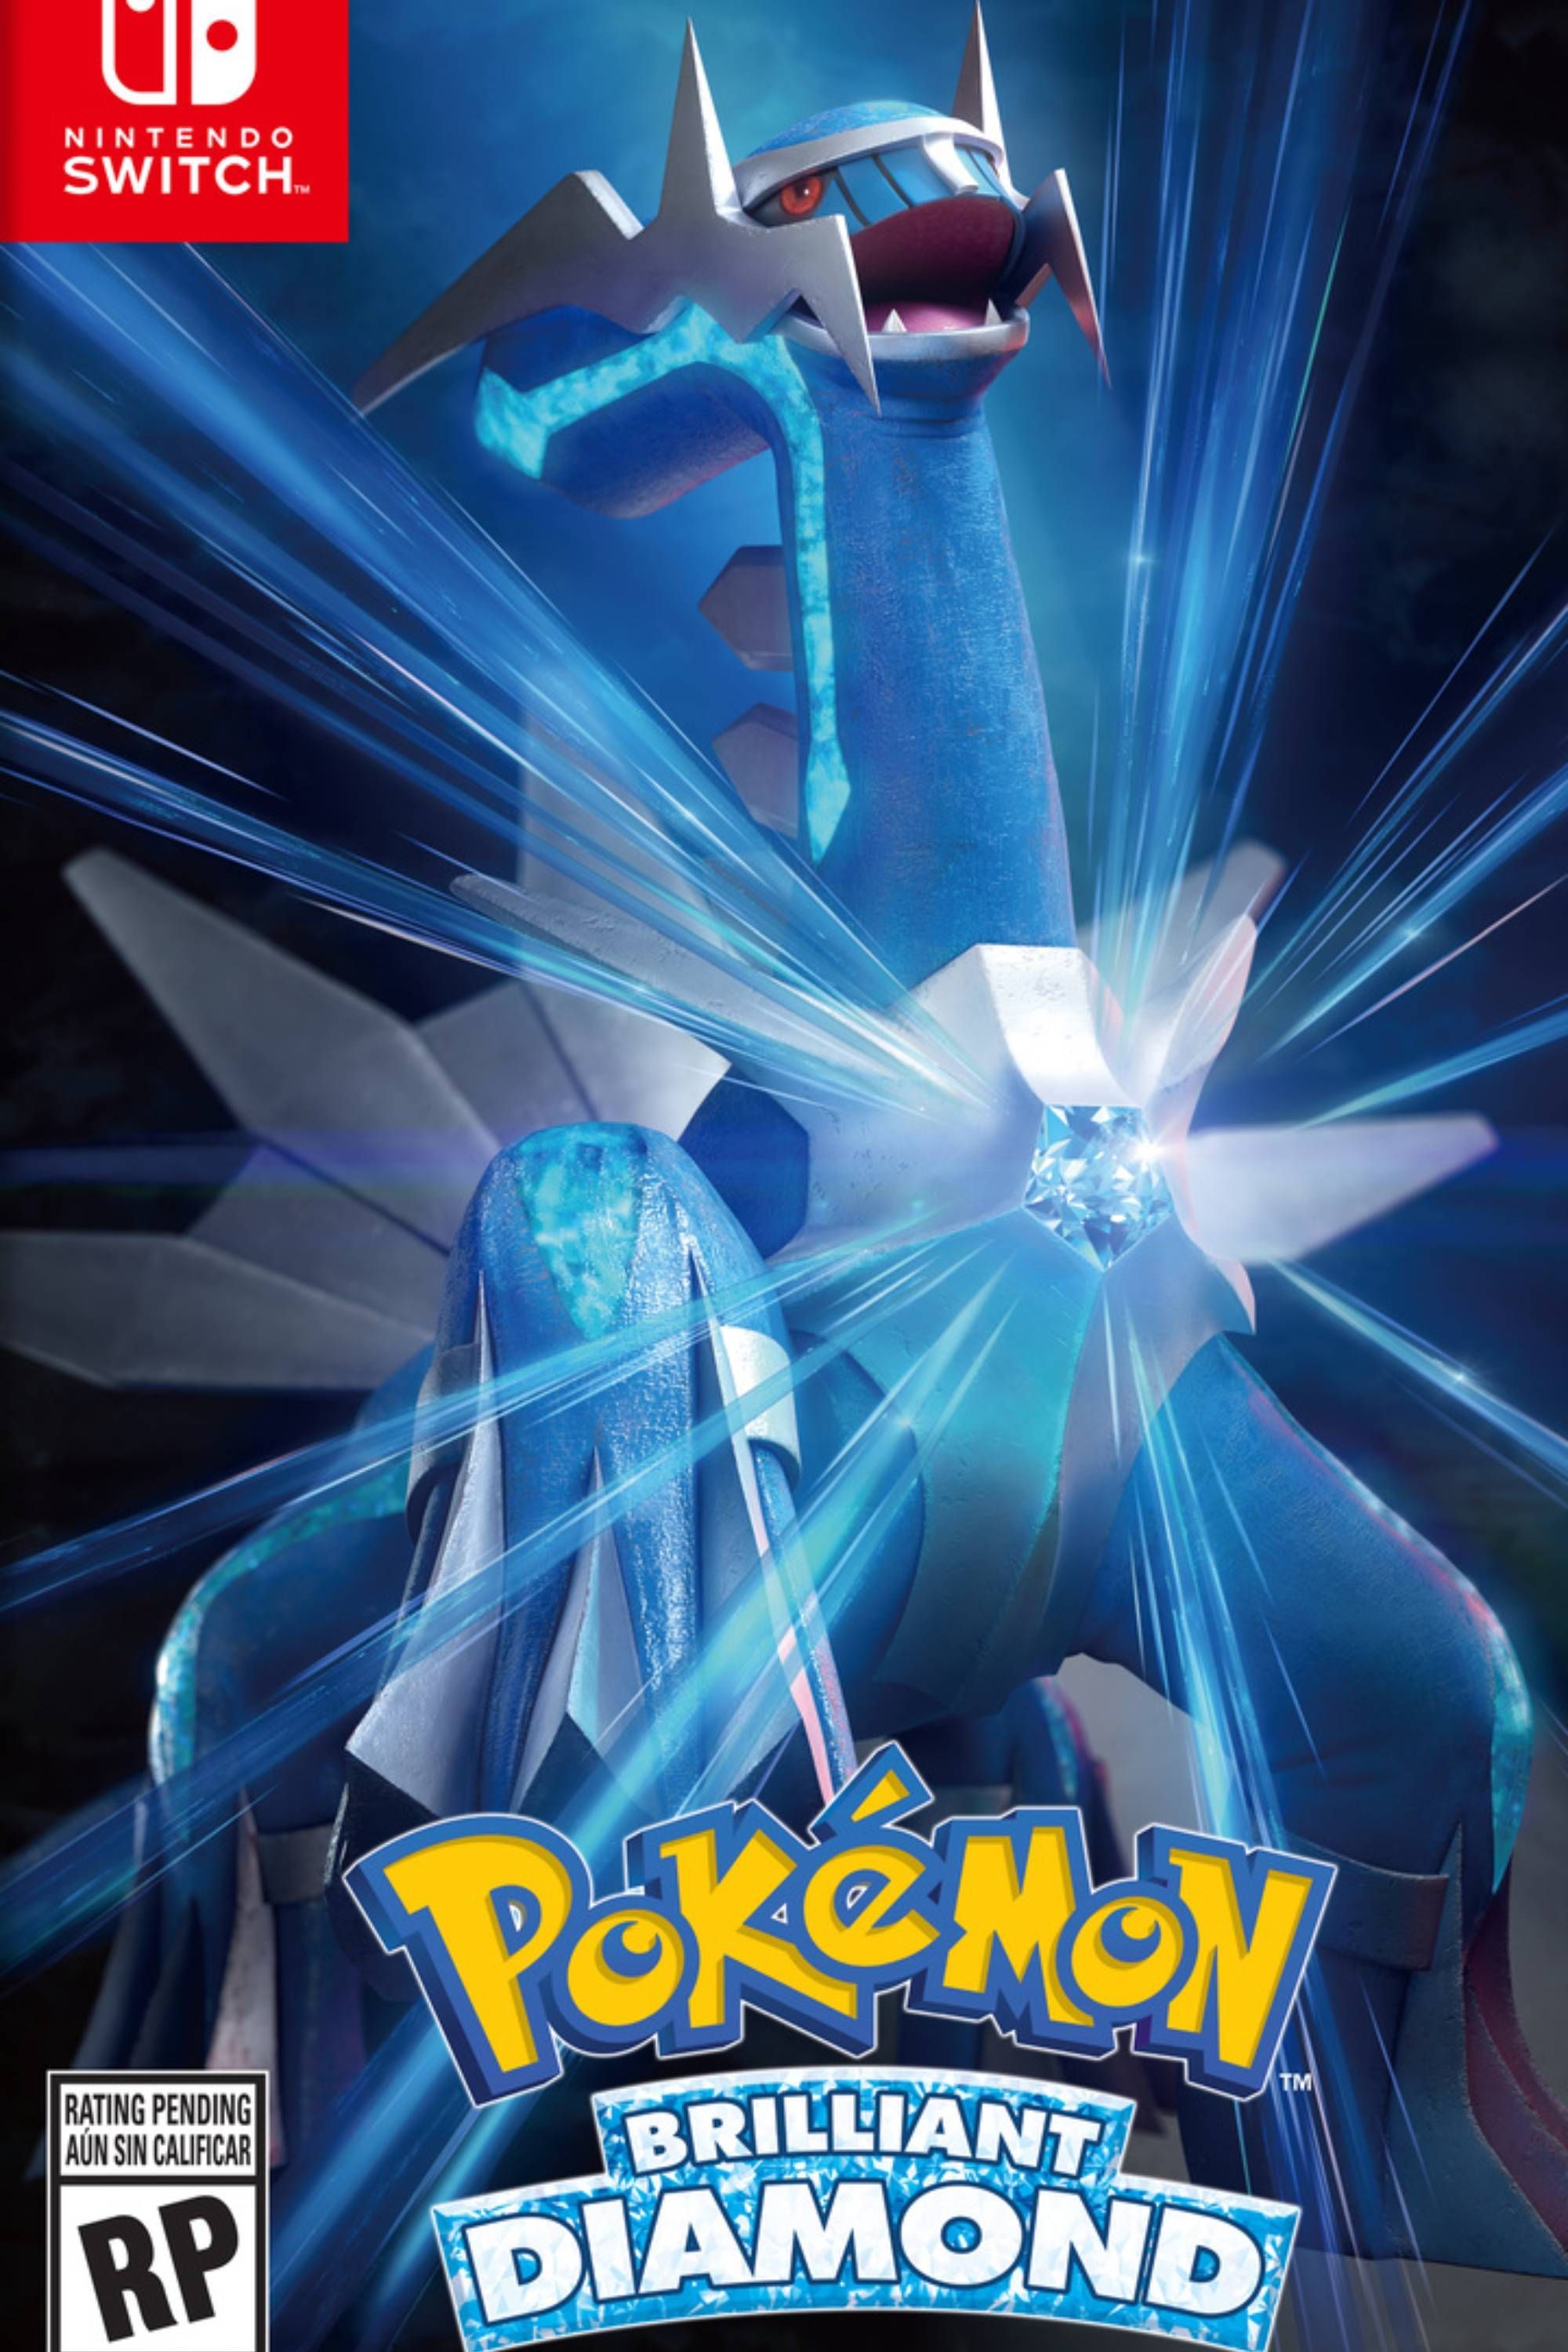 Pokemon Brilliant Diamond and Shining Pearl